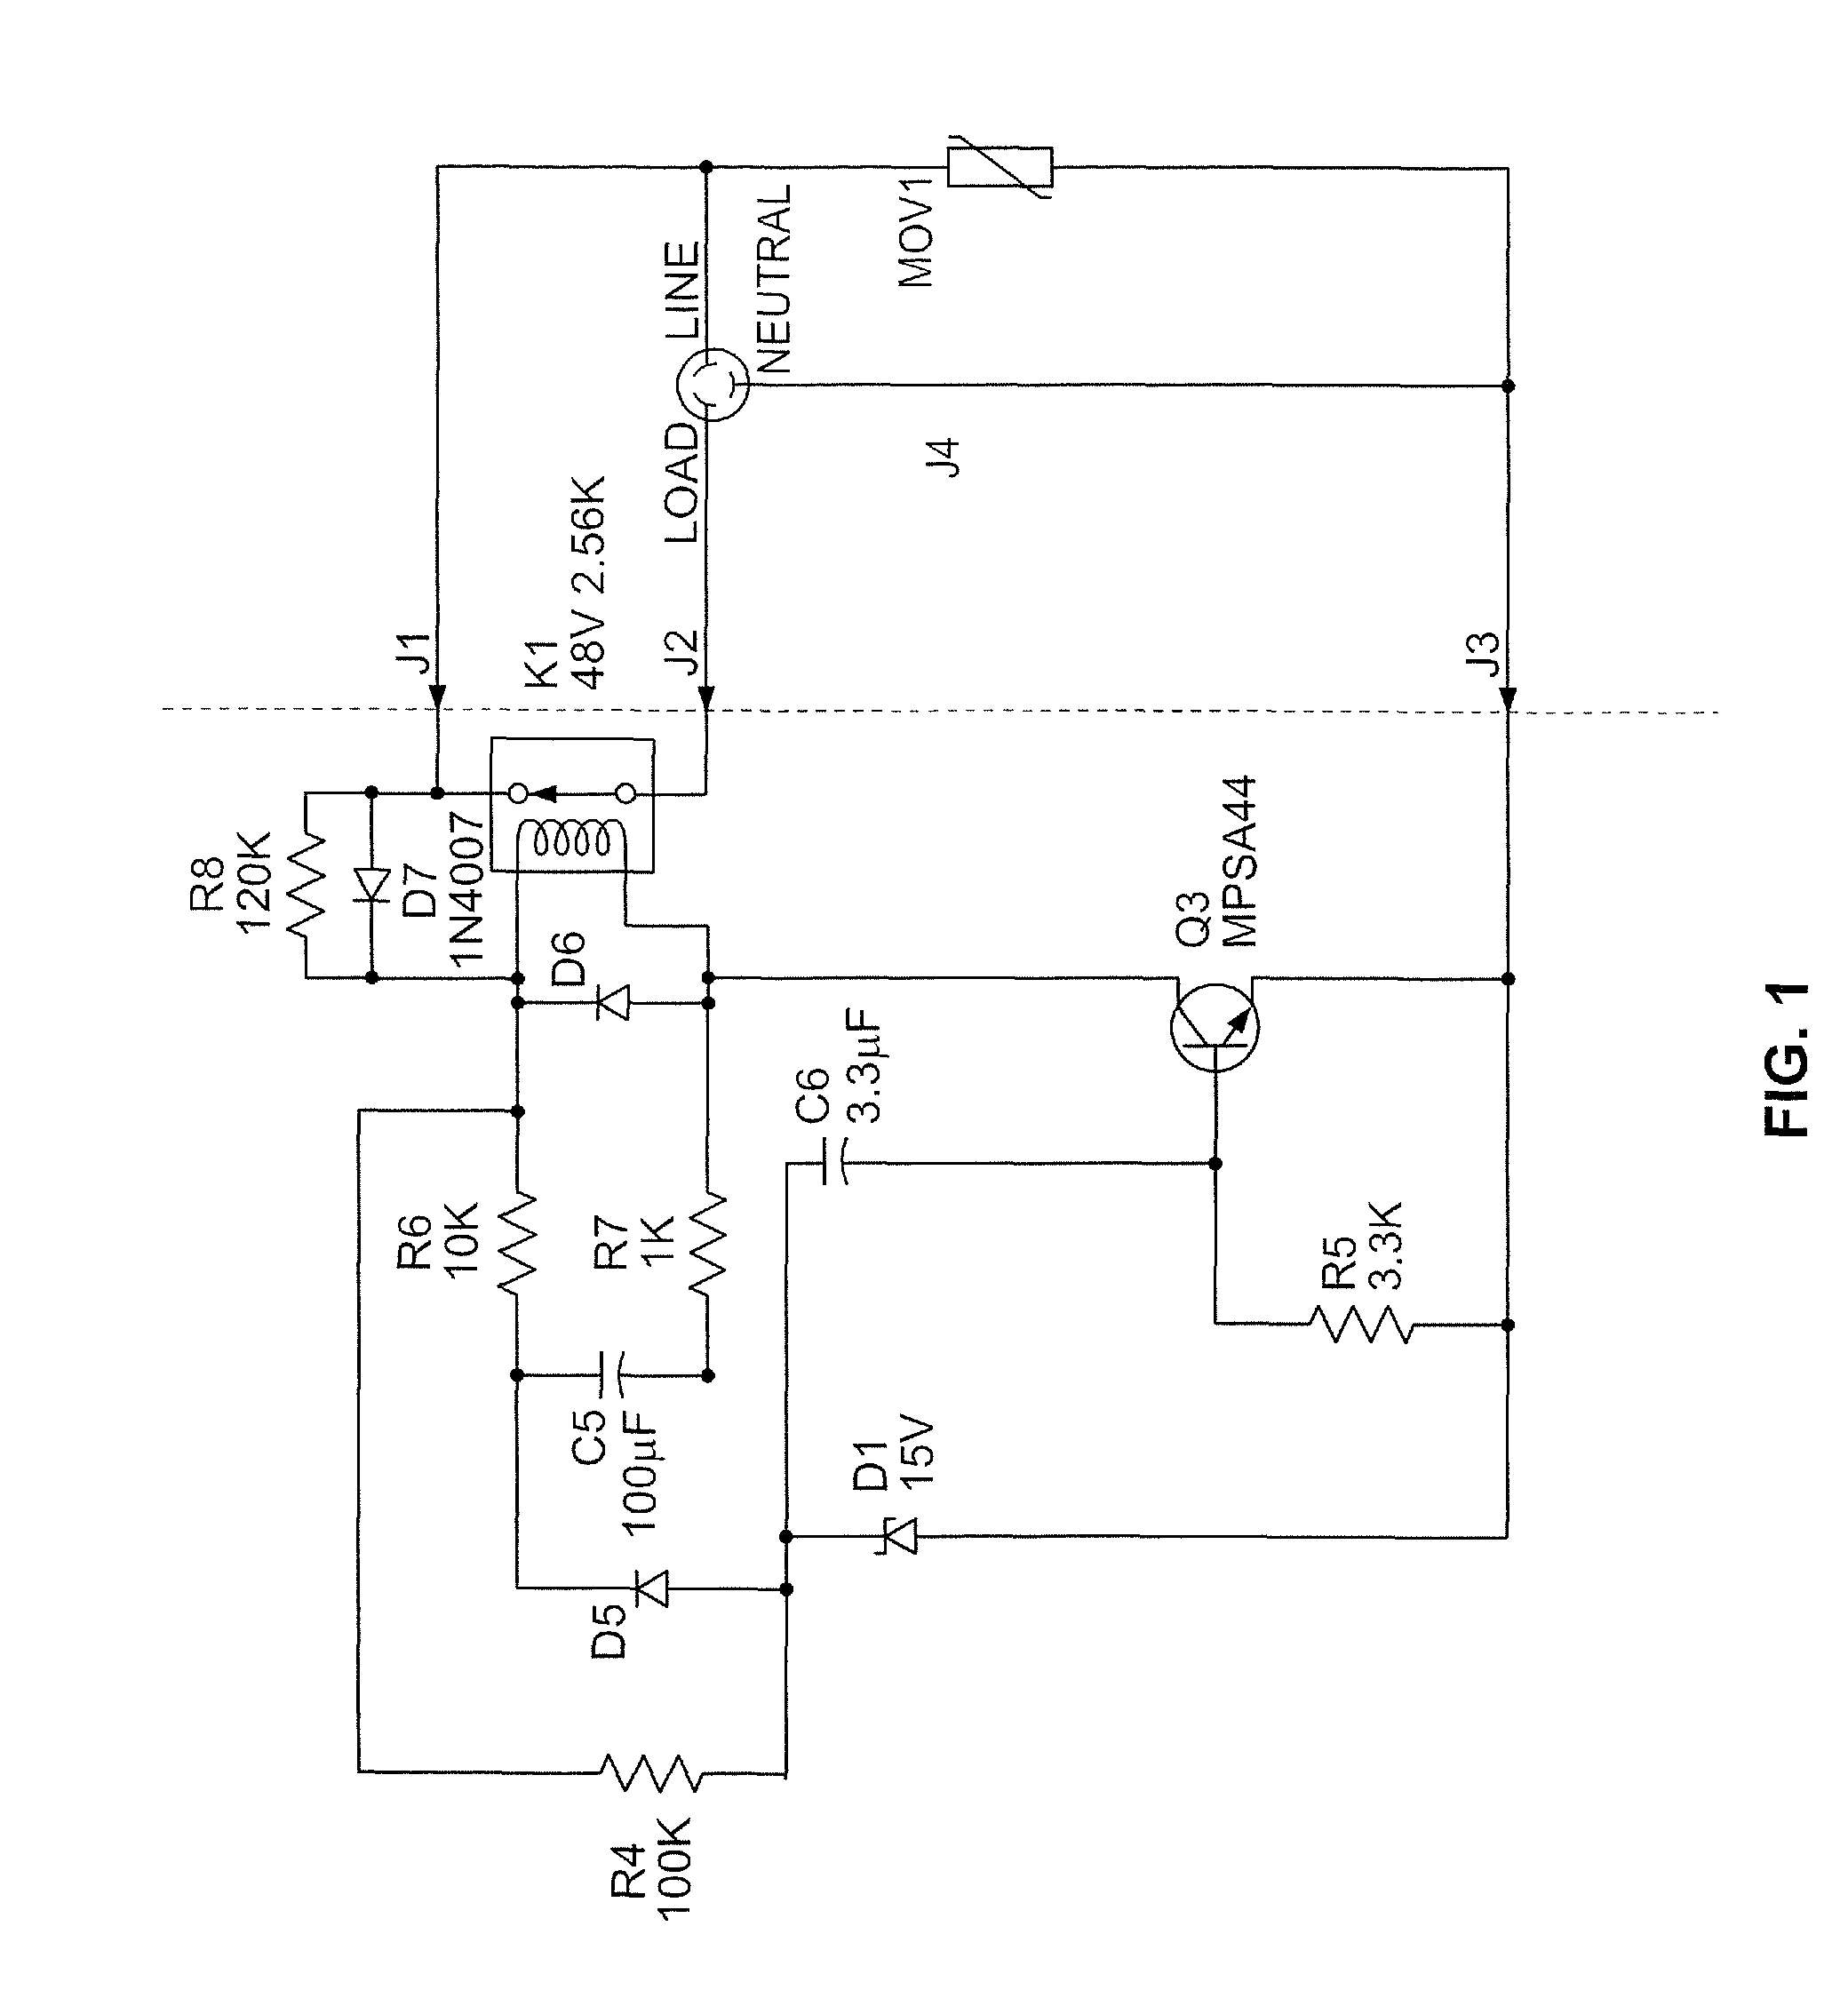 Photosensor circuits including a switch mode power converter